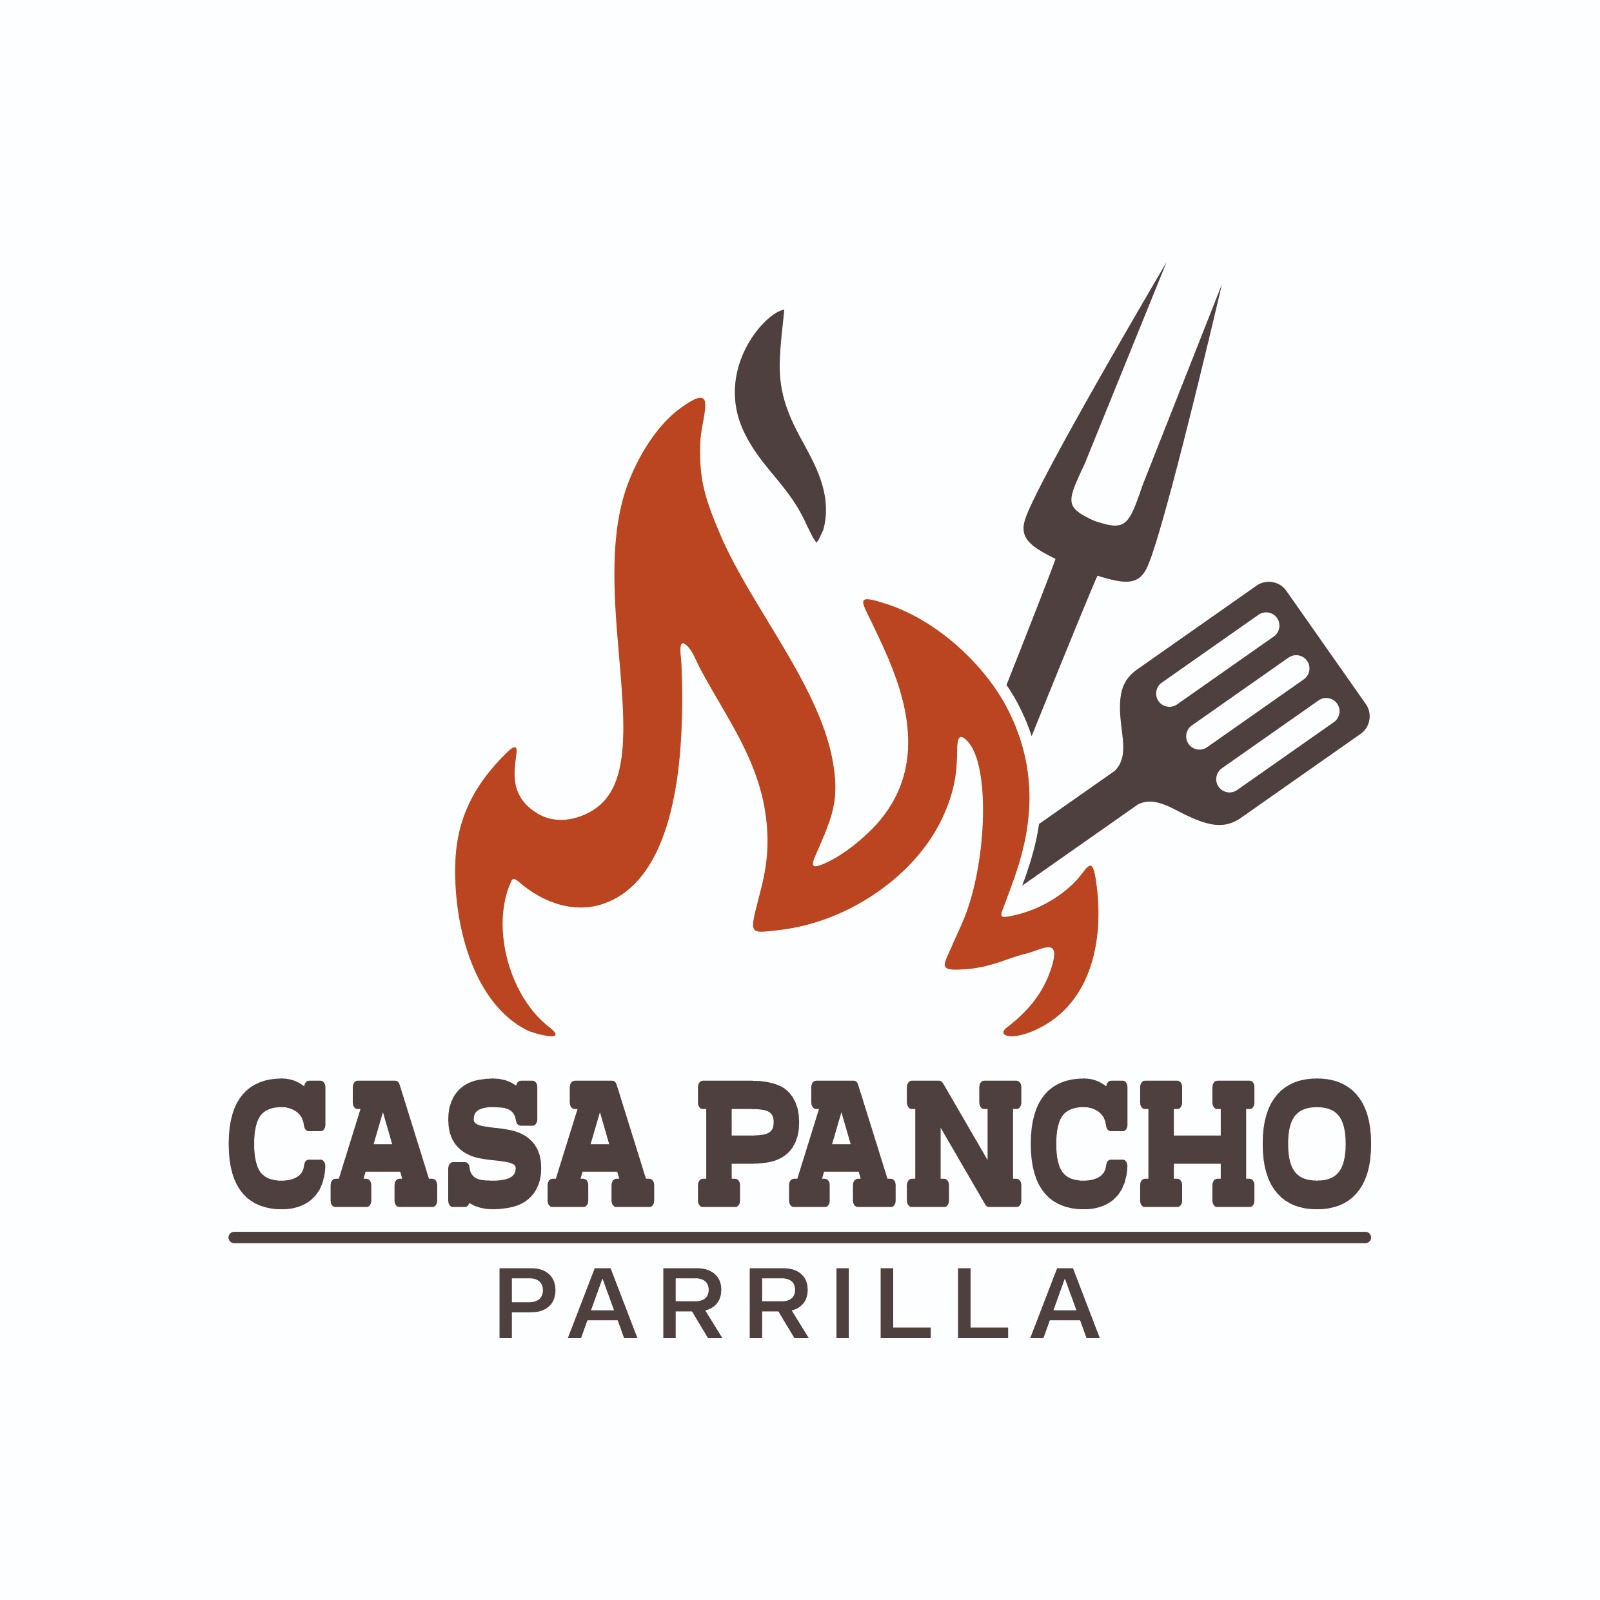 PARRILLA CASA PANCHO